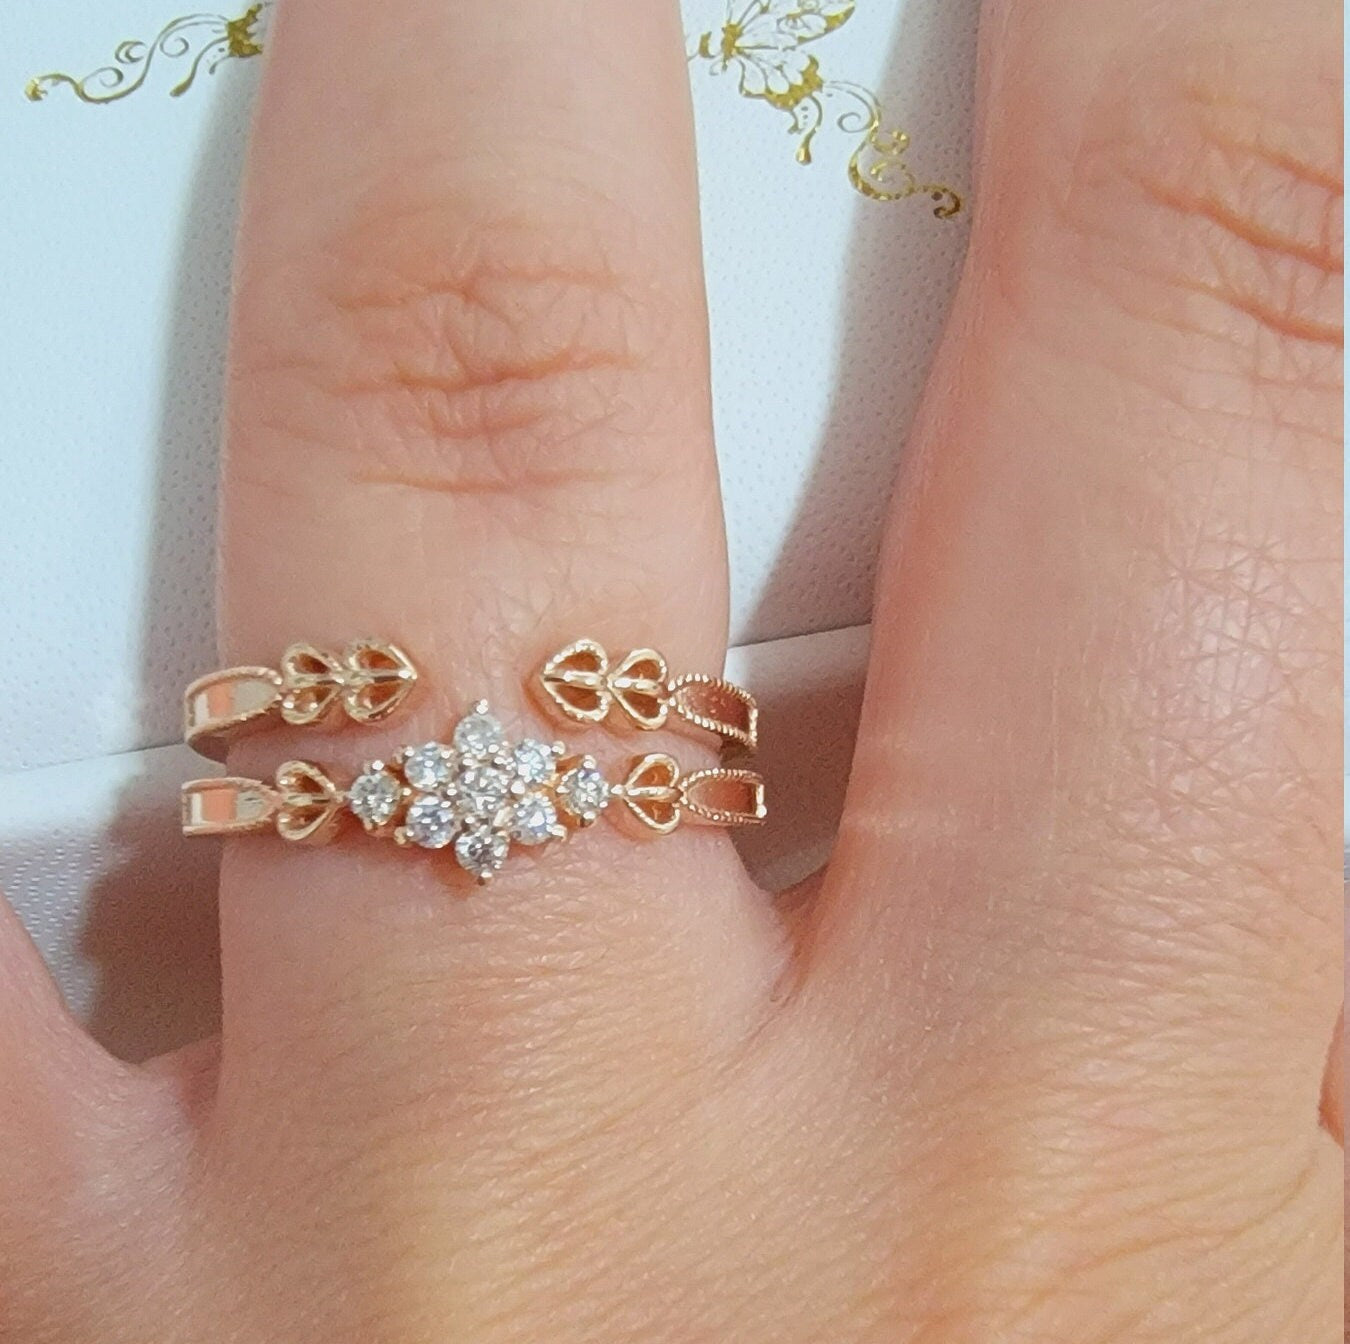 Latest Diamond Rings Design in Gold and Diamond 2021 | Engagement Diamond  Ring Designs for Men Women - YouTube